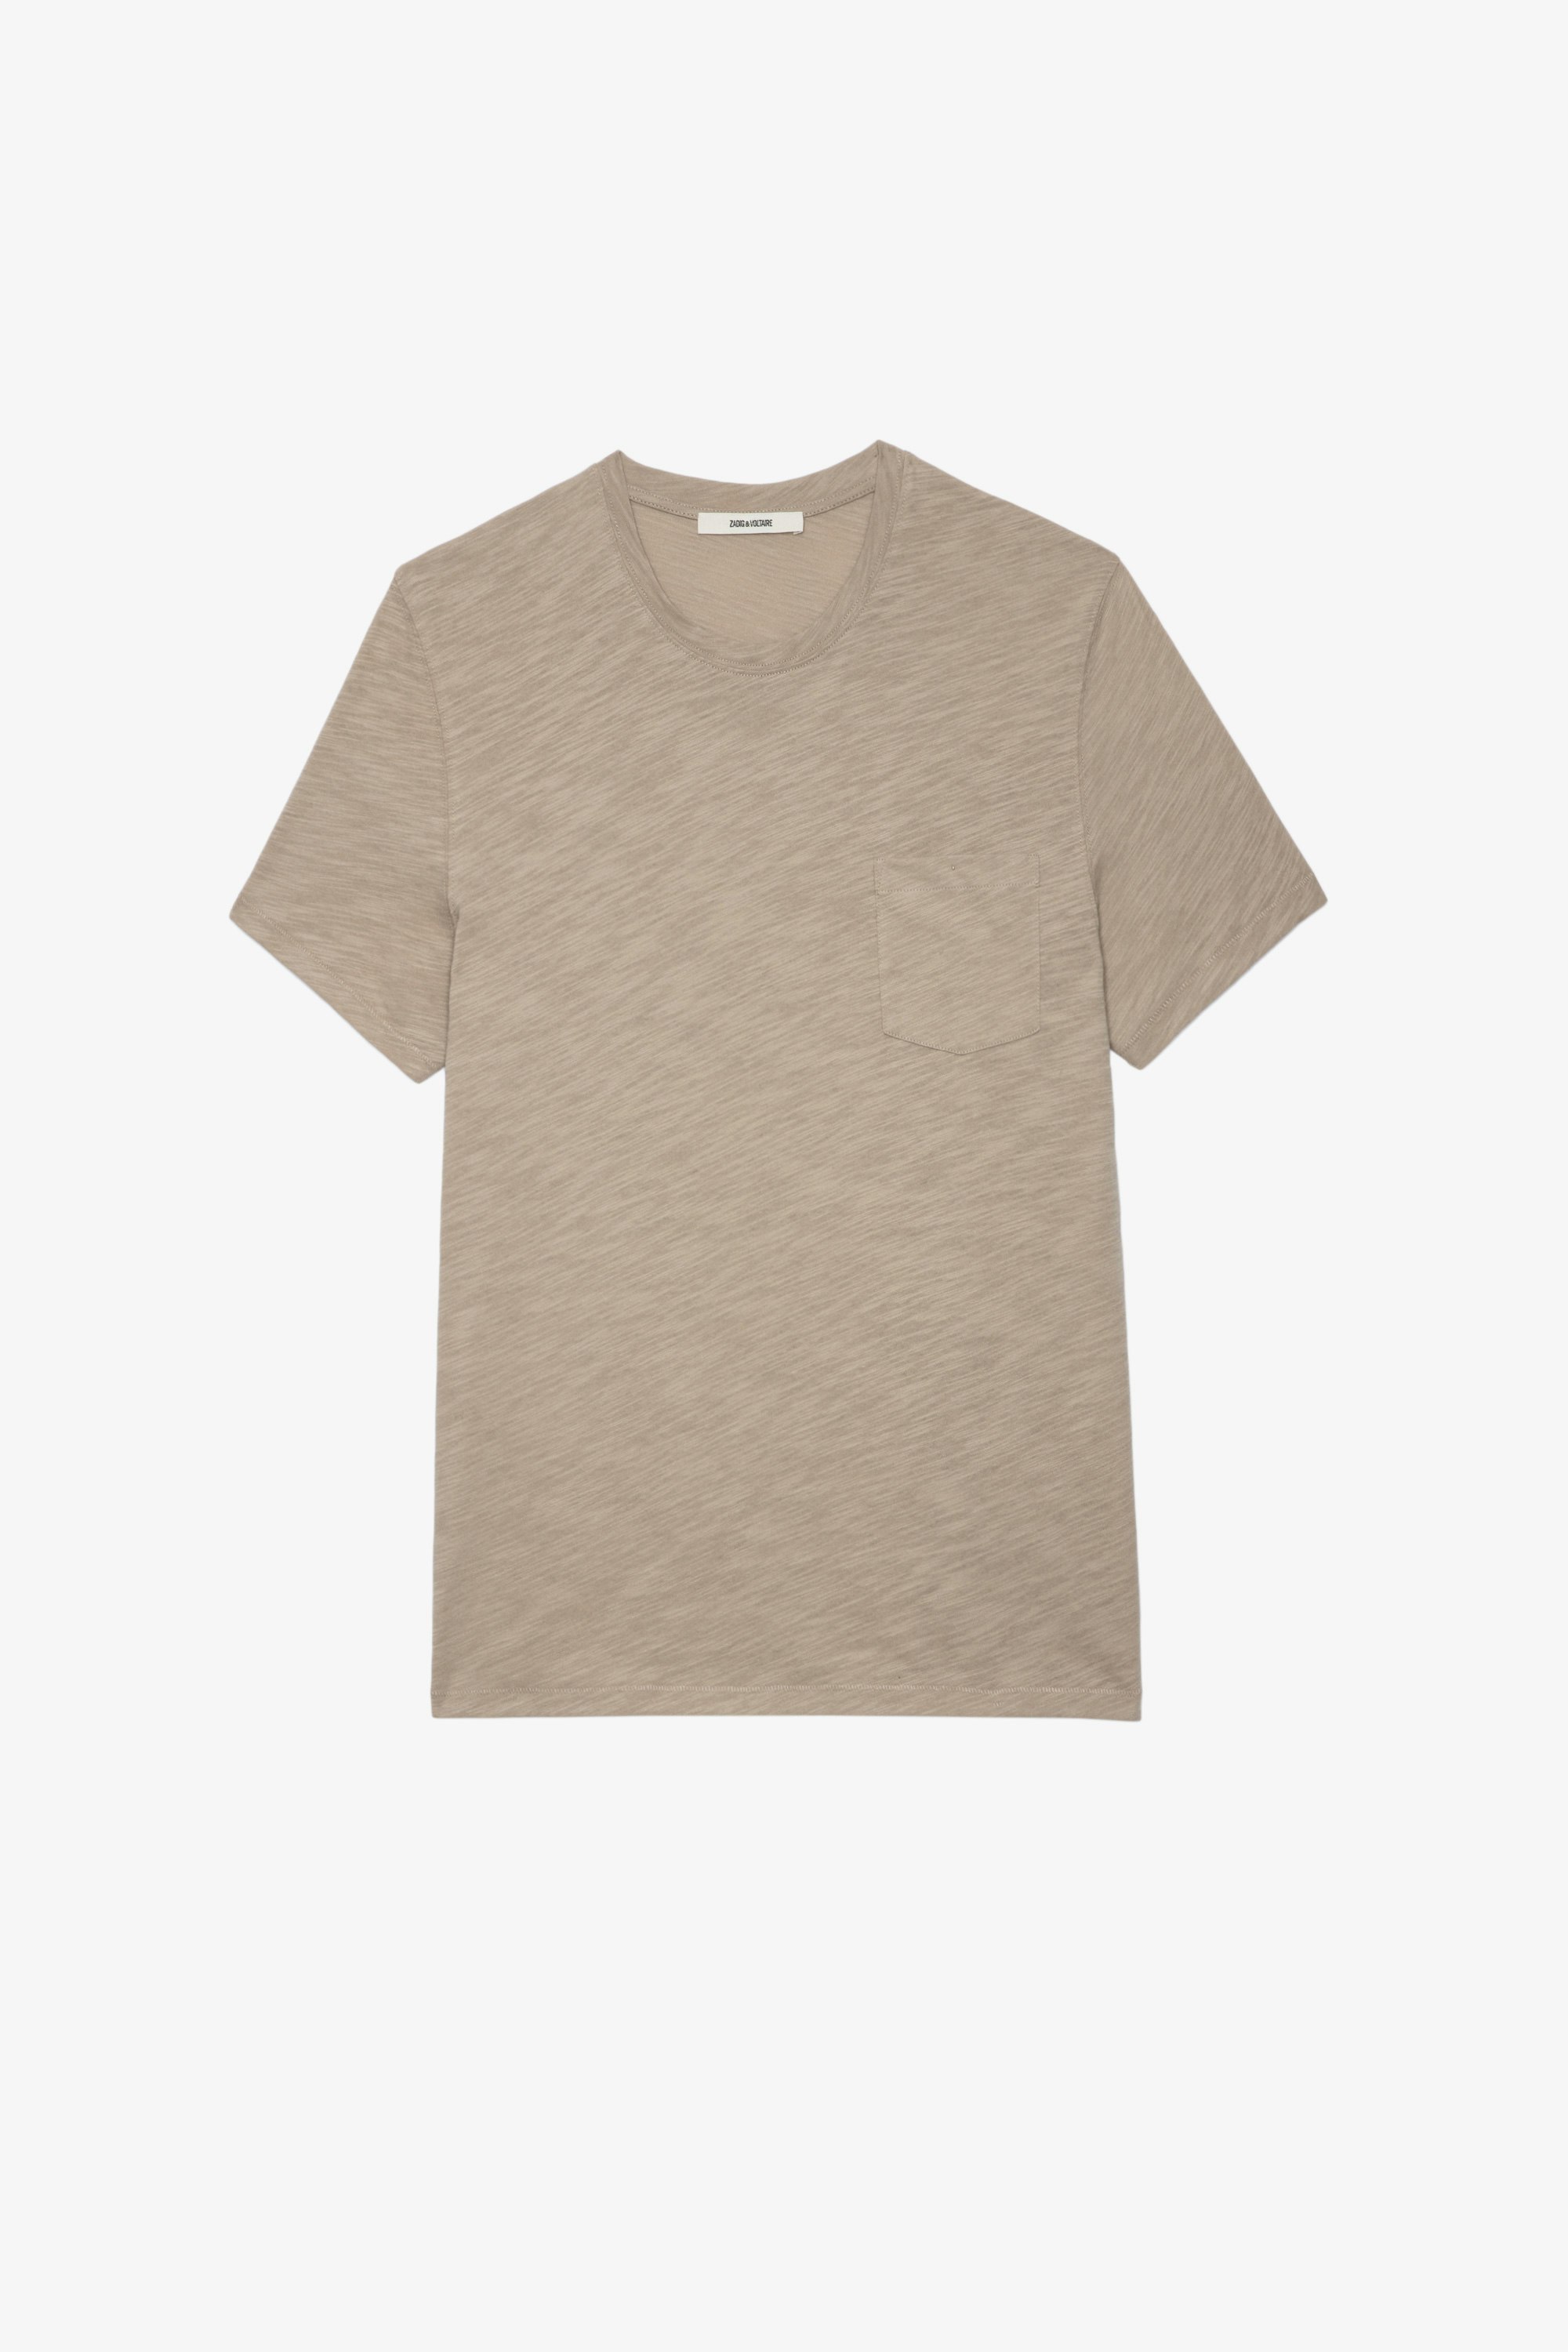 Stockholm Slub T-Shirt Men’s beige cotton slub T-shirt with a skull print on the back